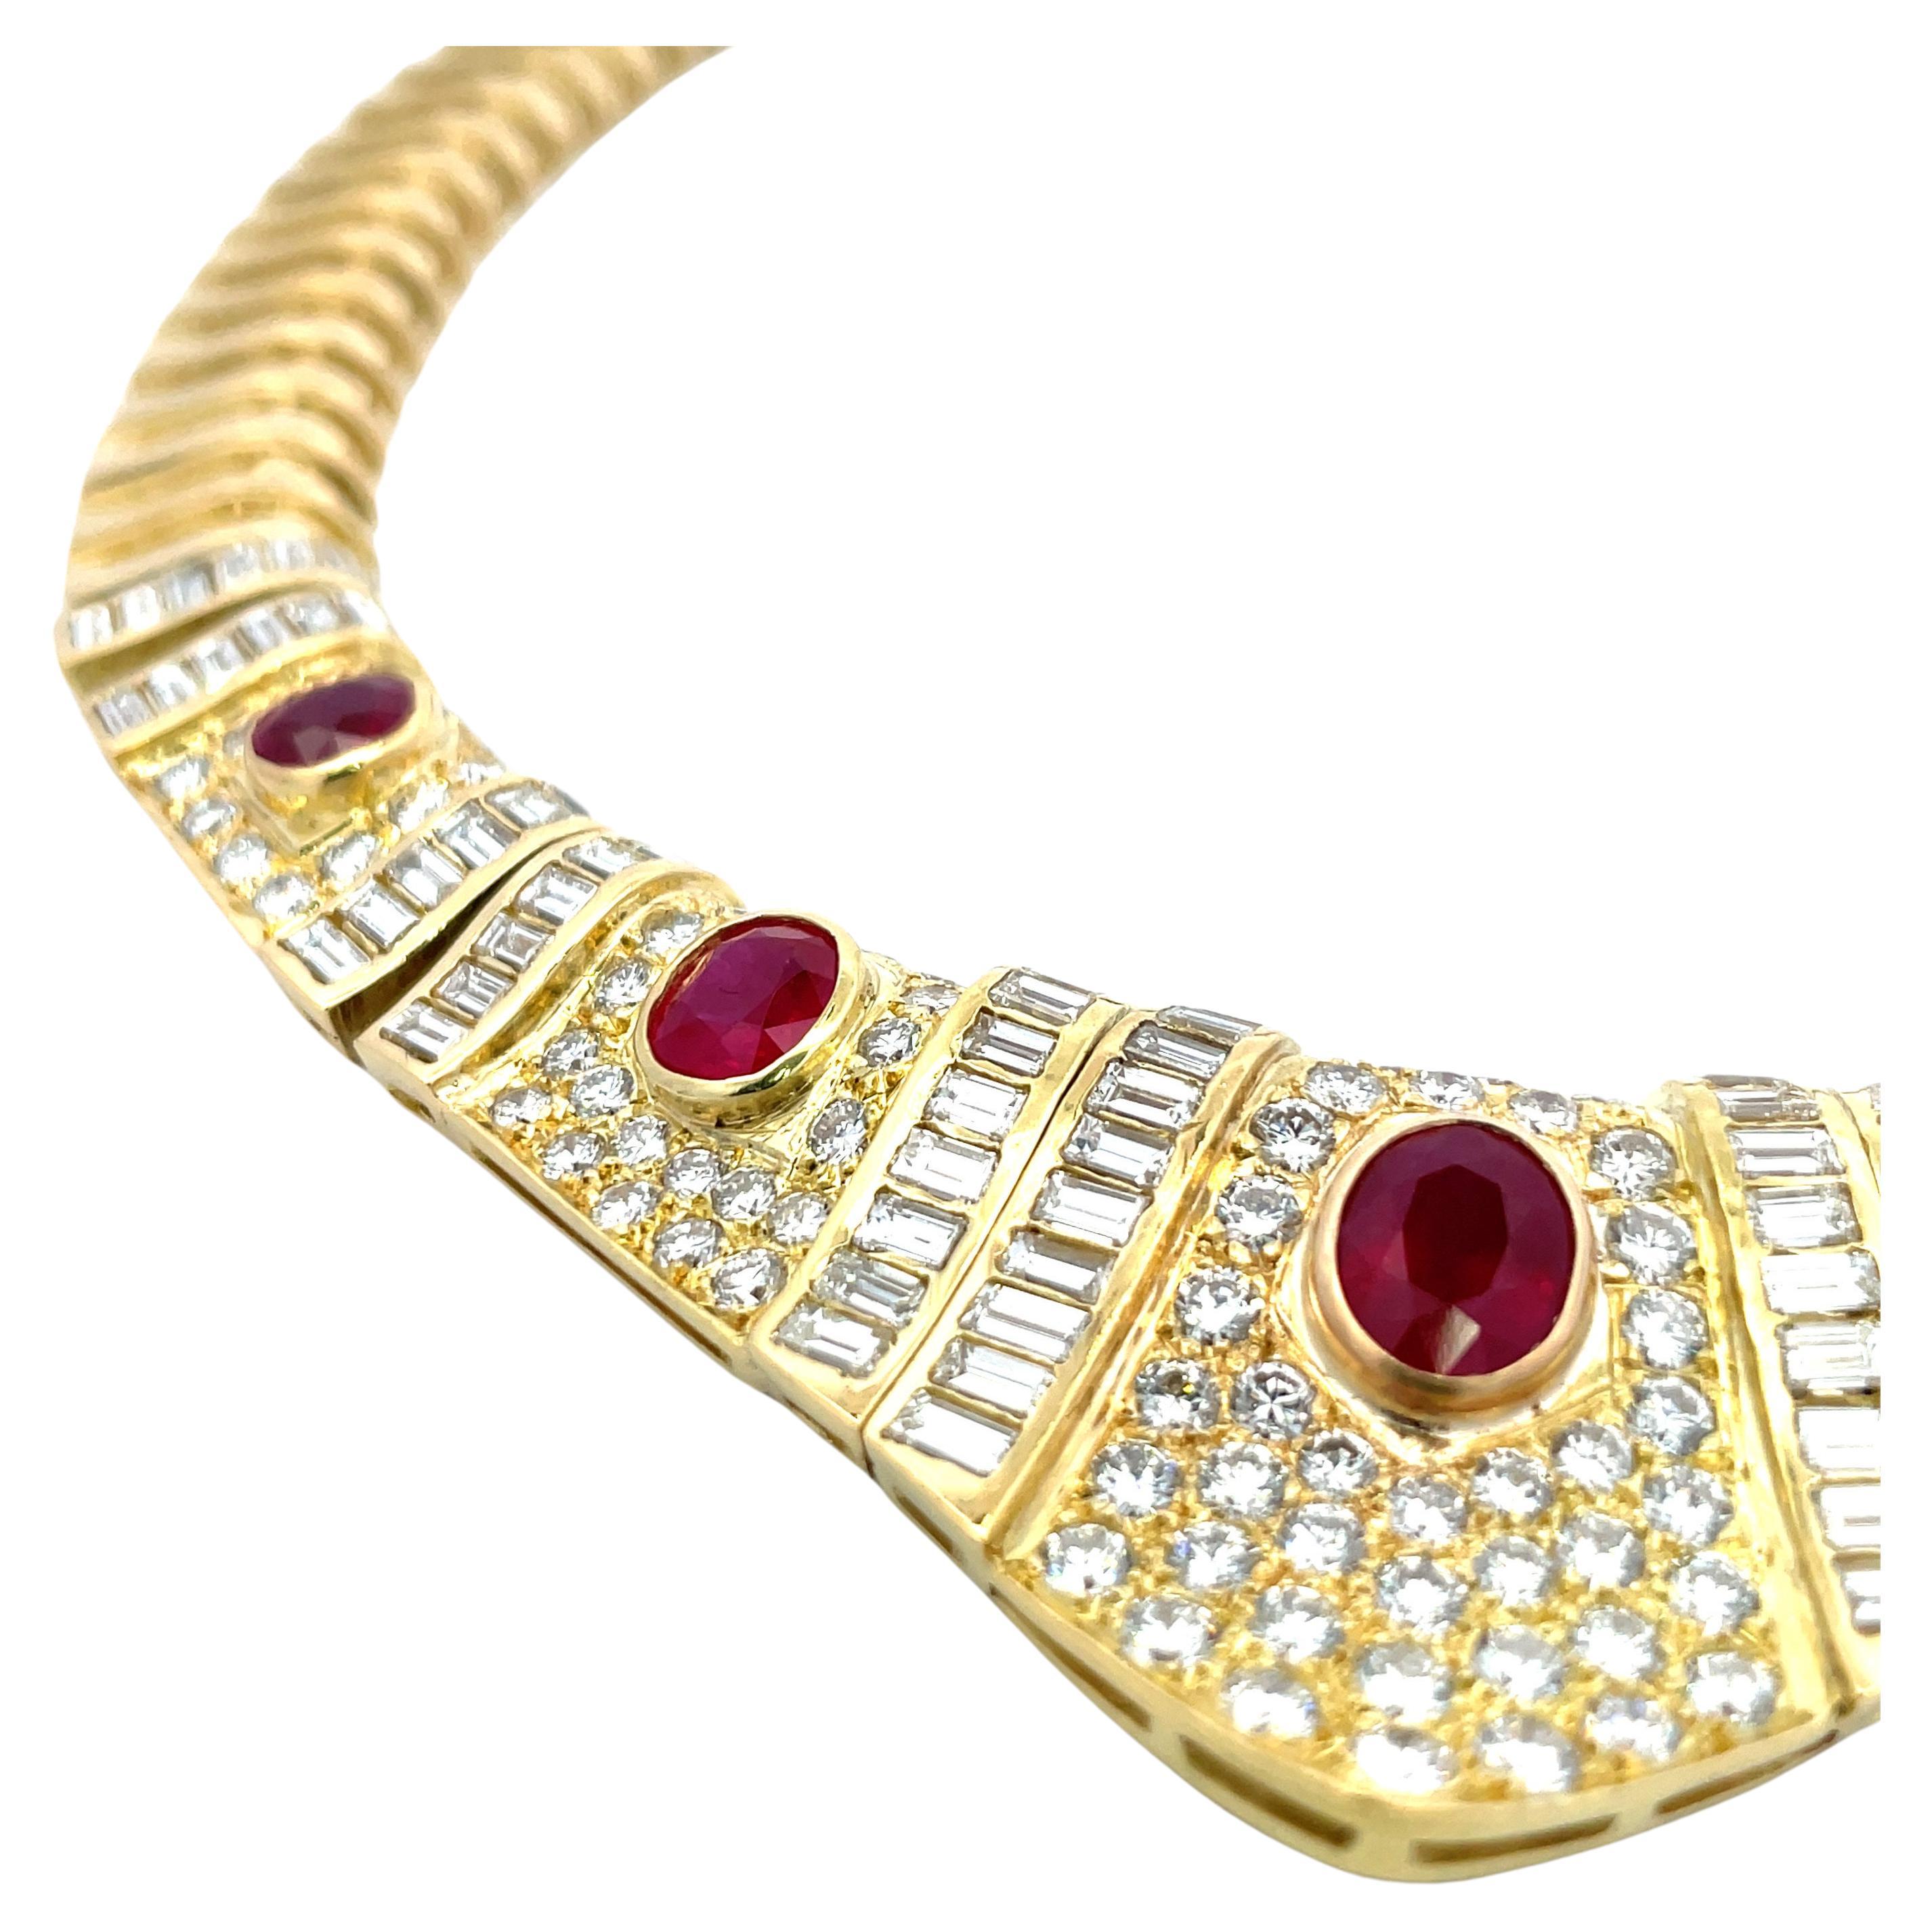 Oval Cut Certified Burma Ruby Diamond Collar Necklace 24.50 Carats 18 Karat Yellow Gold For Sale